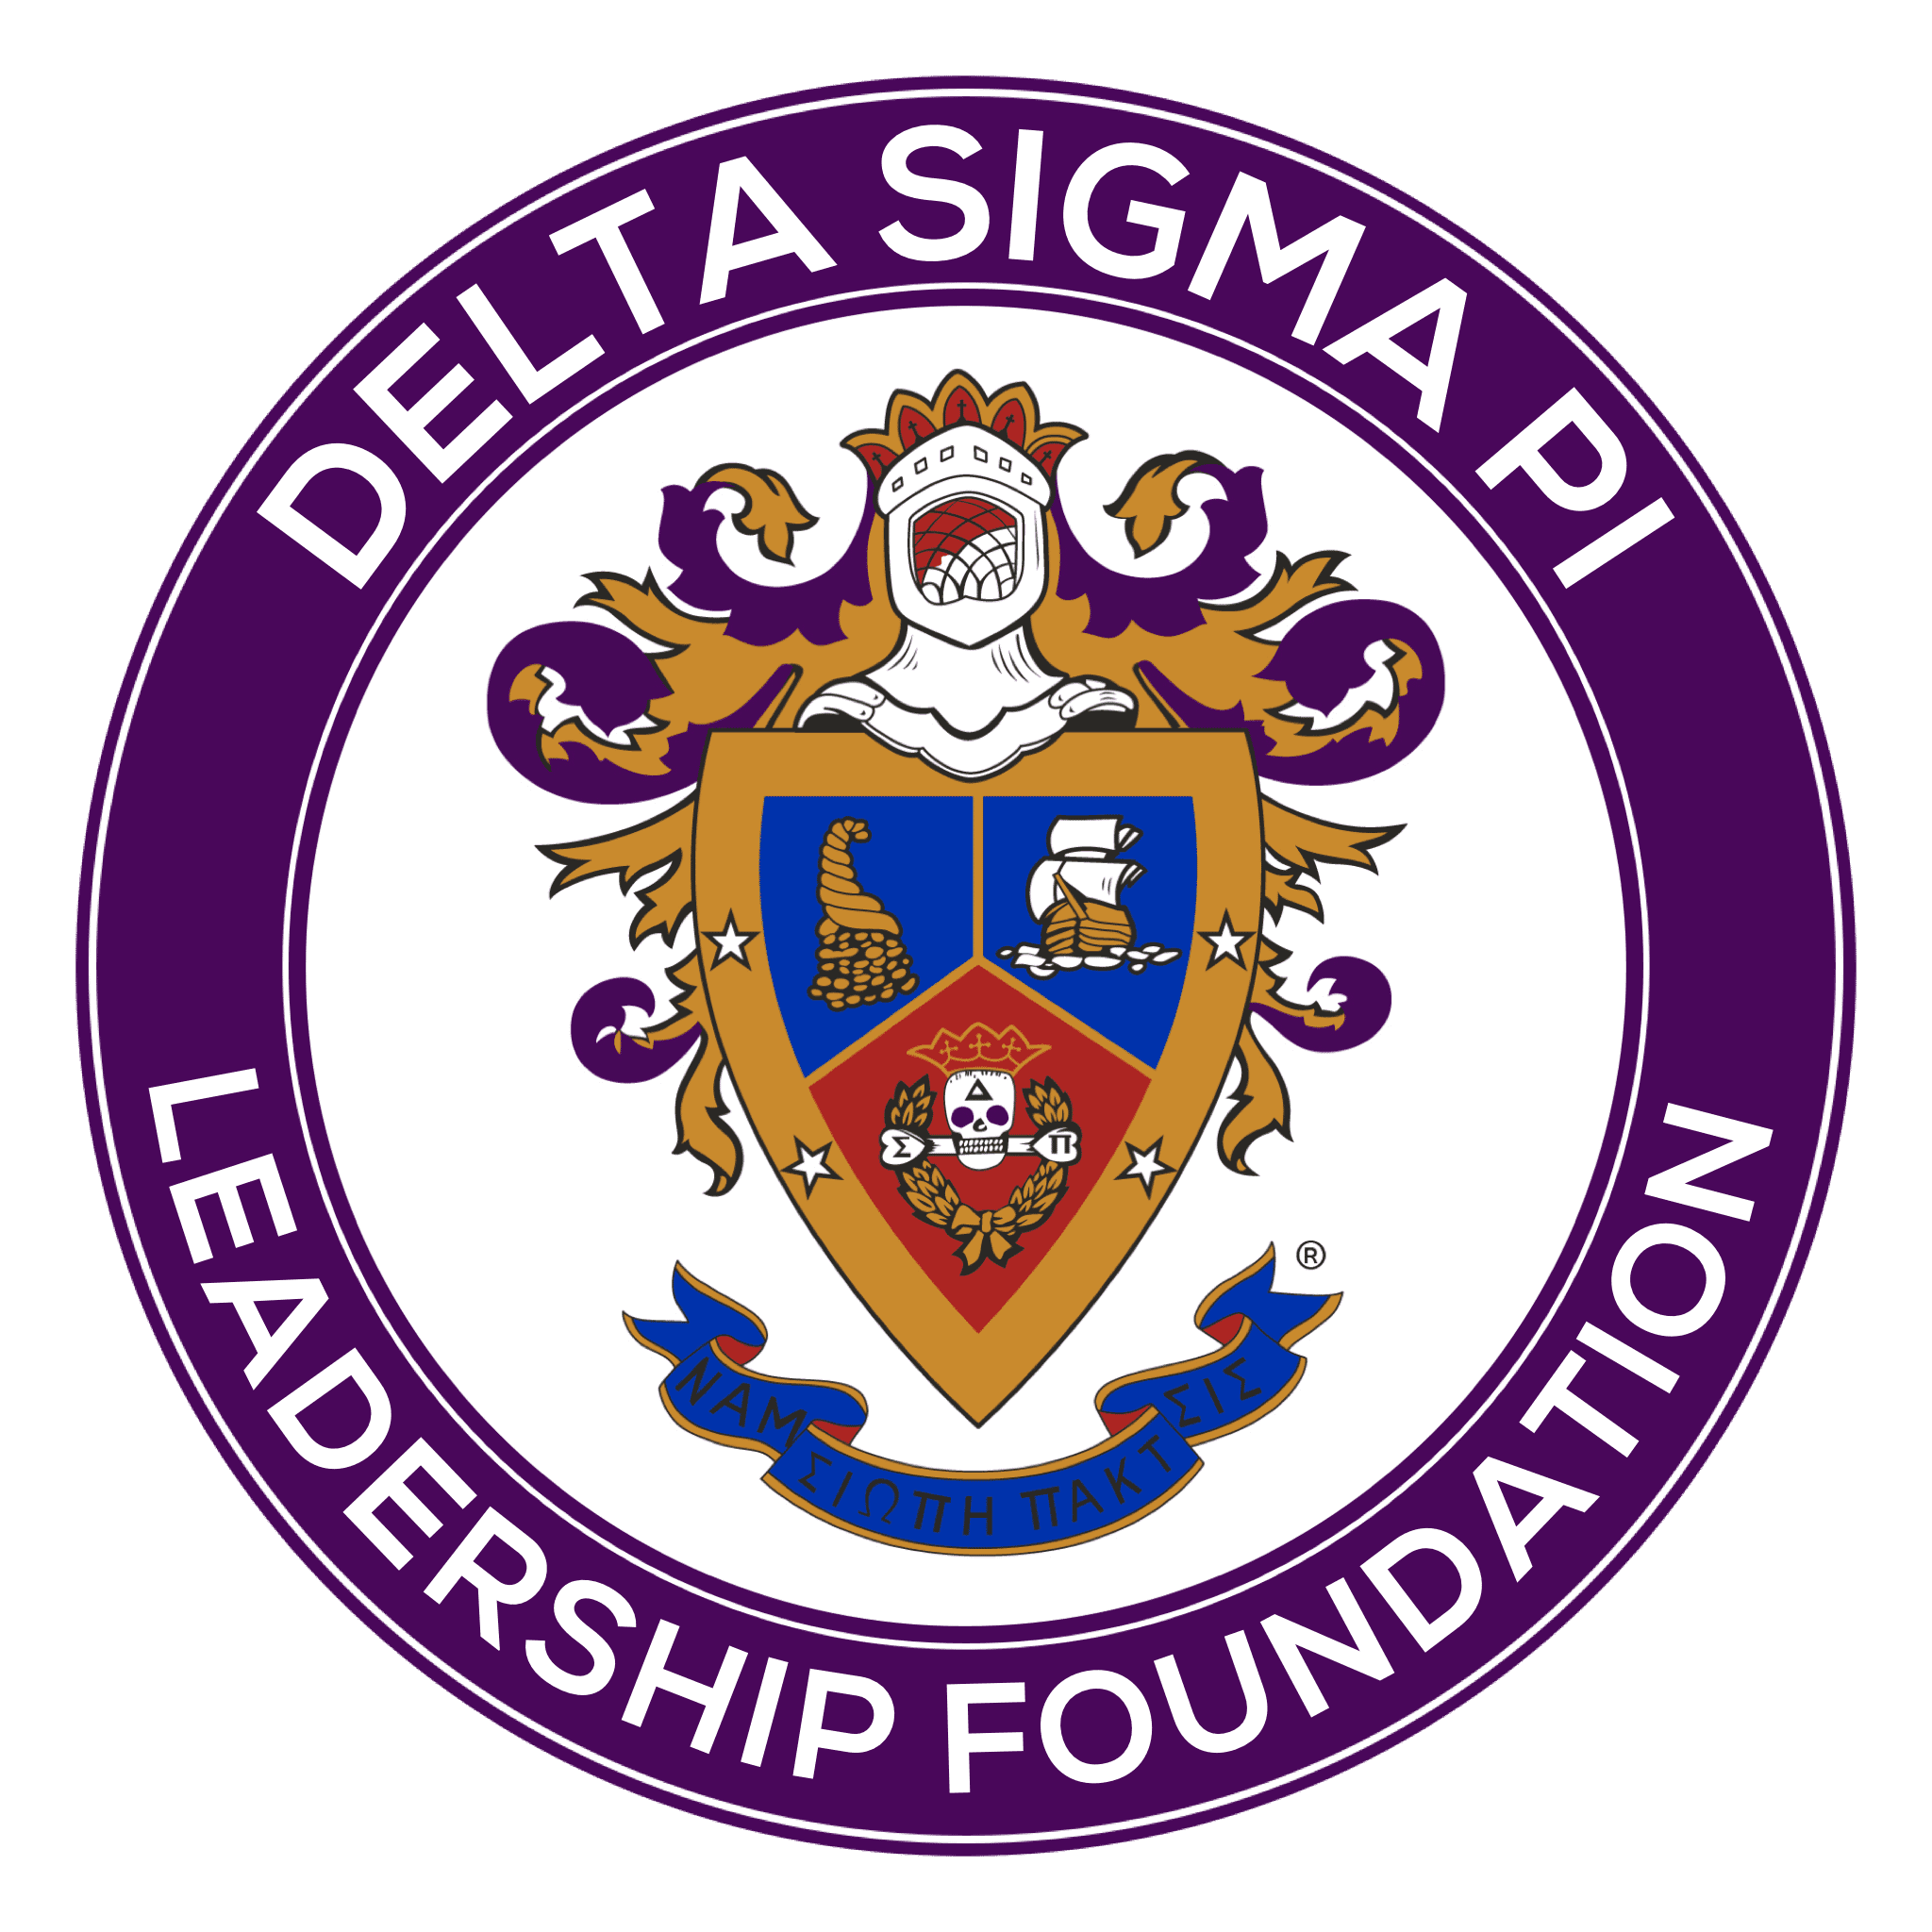 Leadership Foundation Seal - Full Color